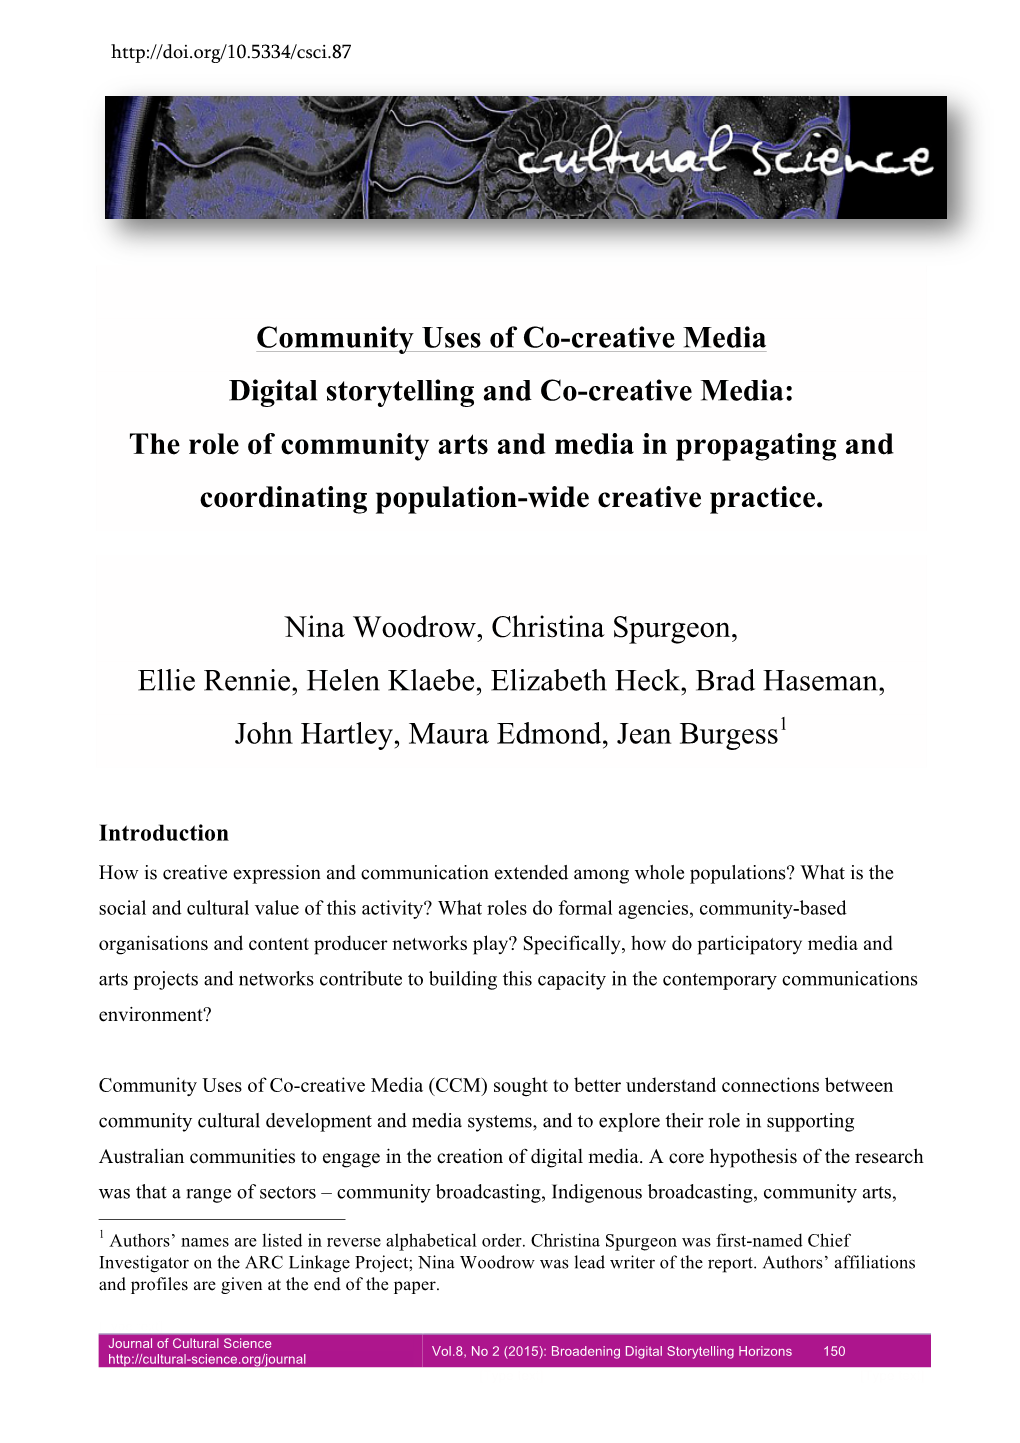 Community Uses of Co-Creative Media Digital Storytelling And